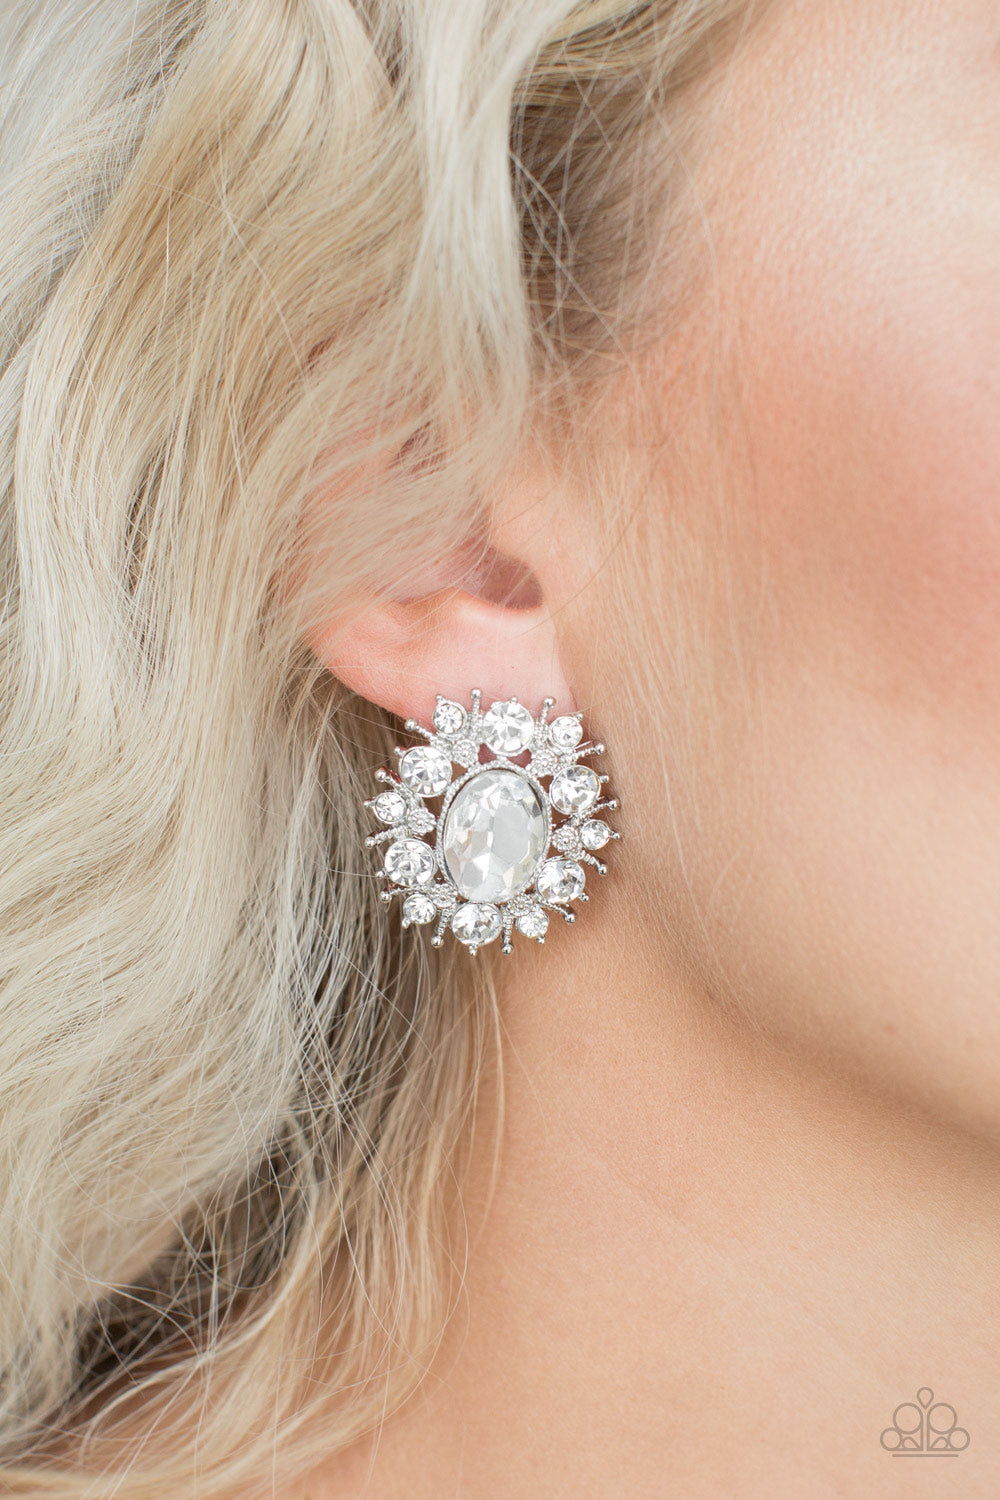 Serious Star Power - White Earrings - Paparazzi Accessories - All That Sparkles XOXO